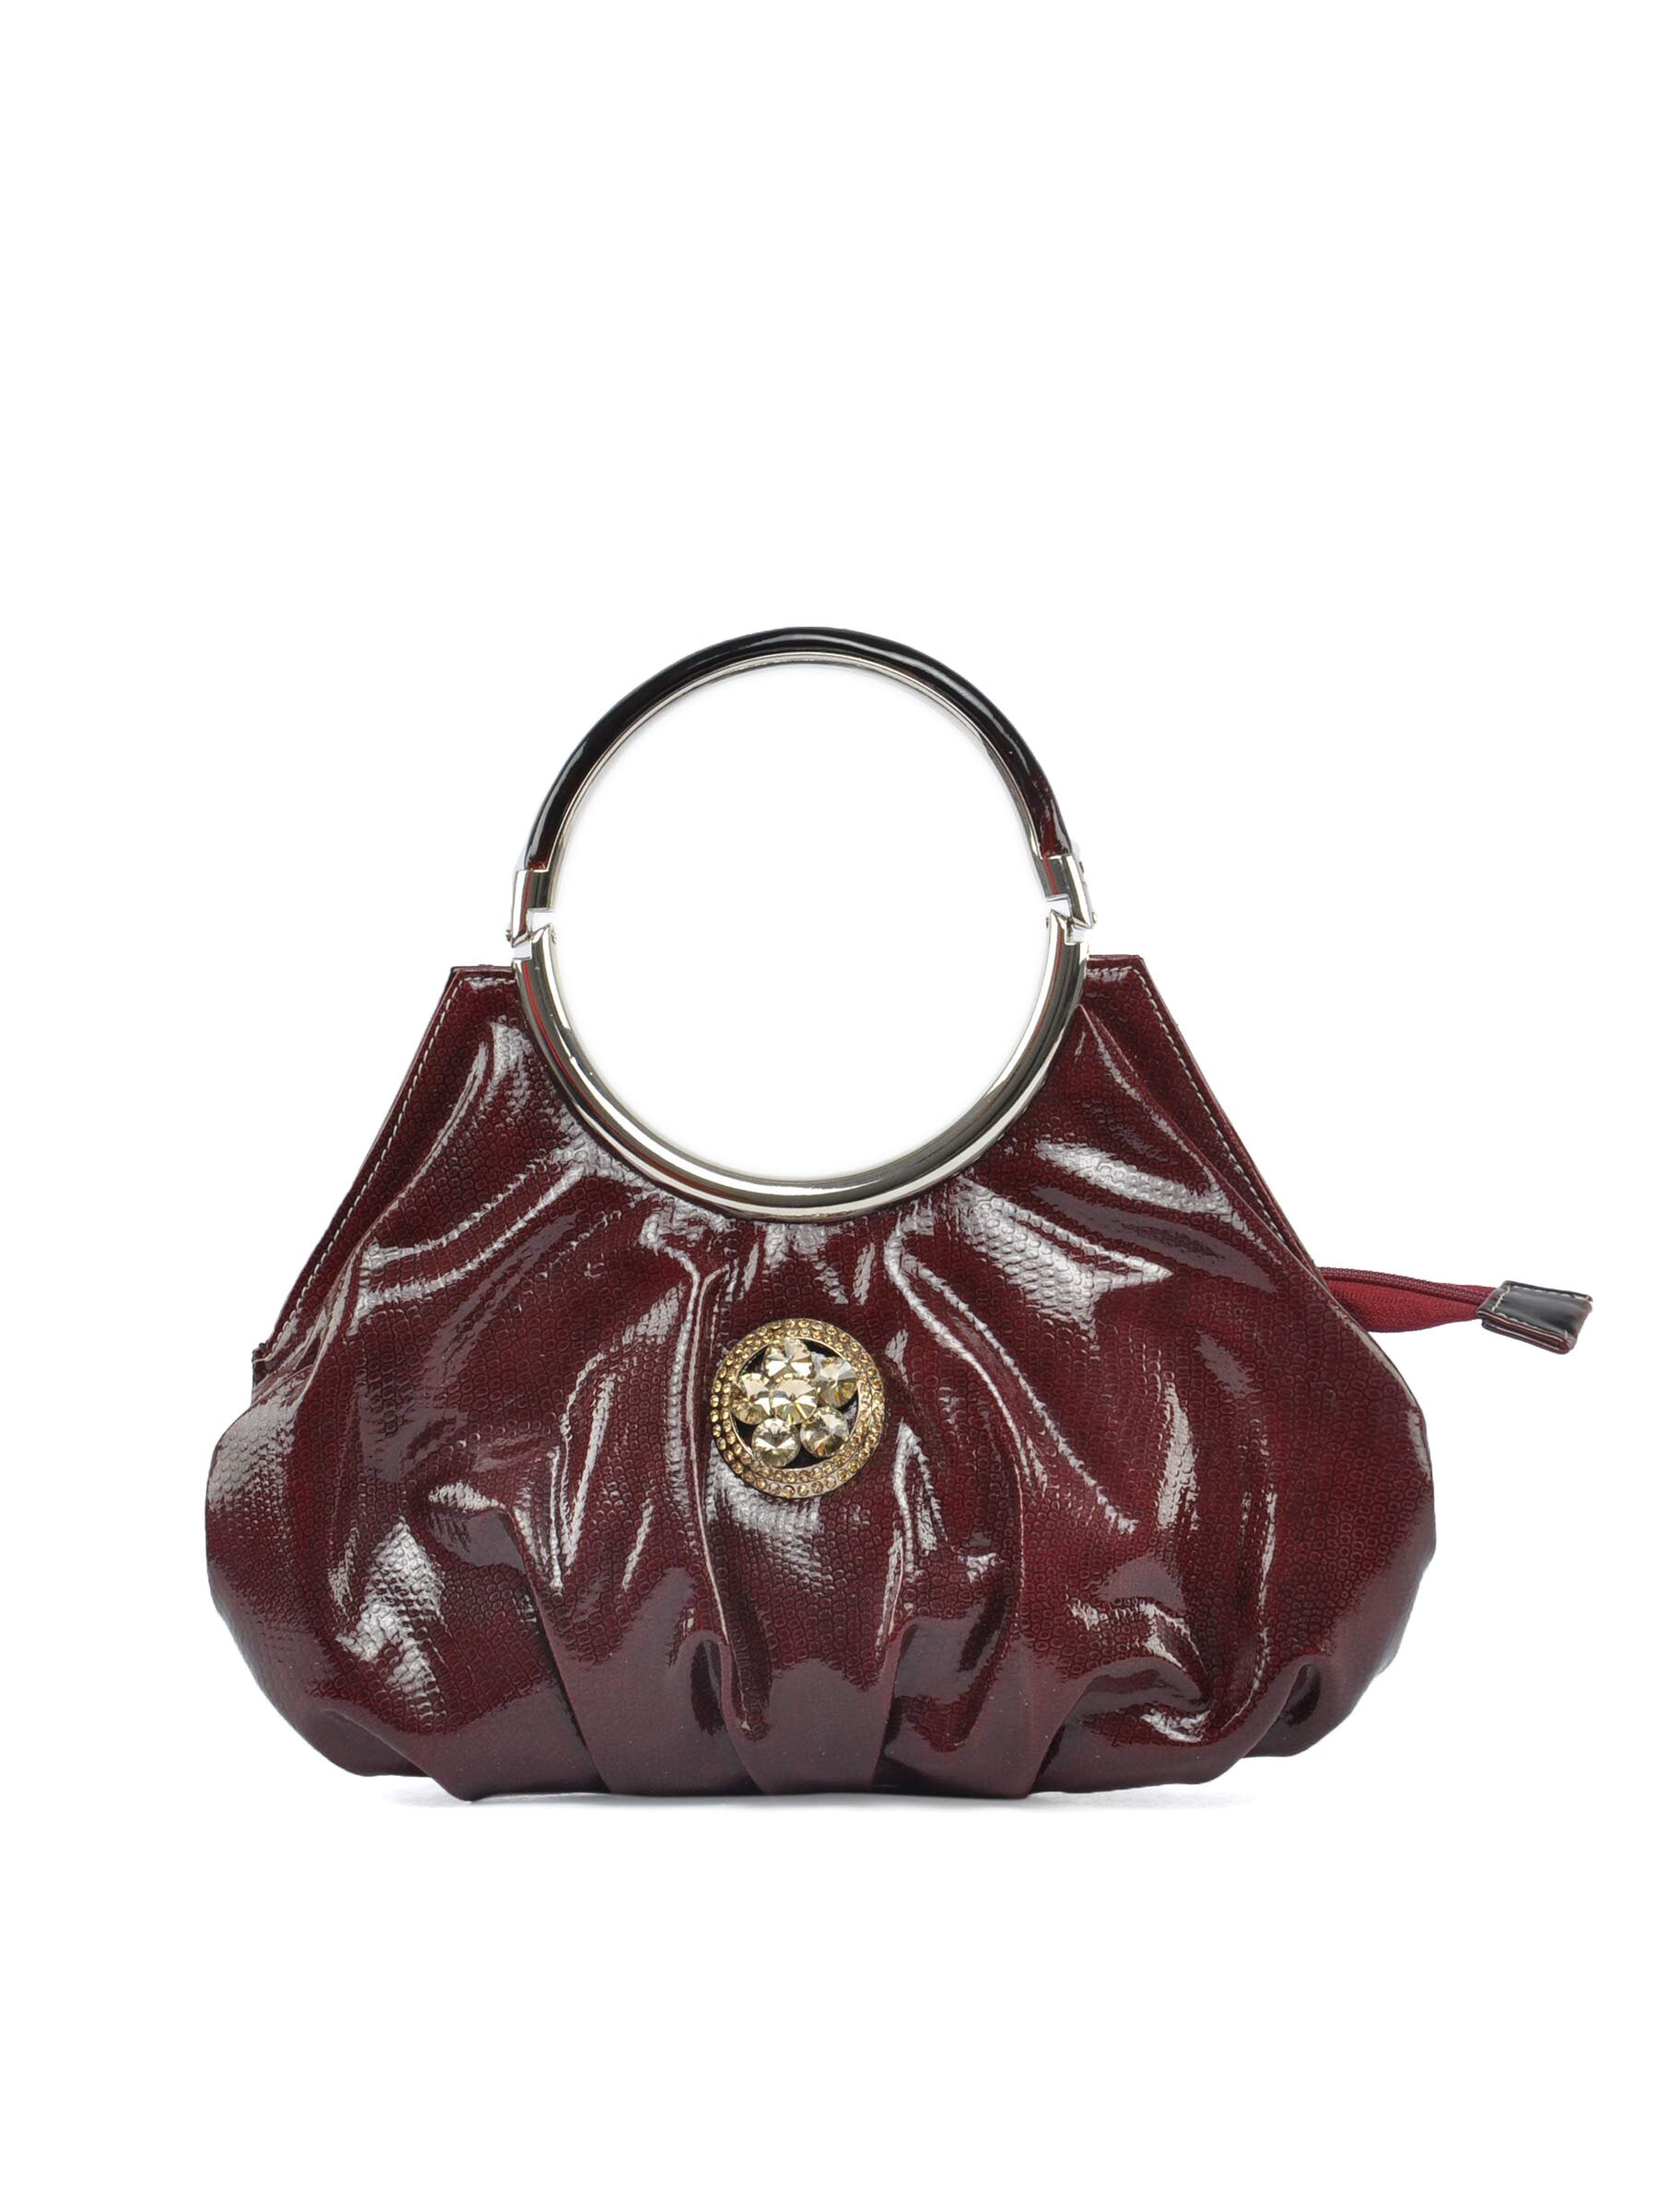 Spice Art Women Casual Cherry Maroon Handbag